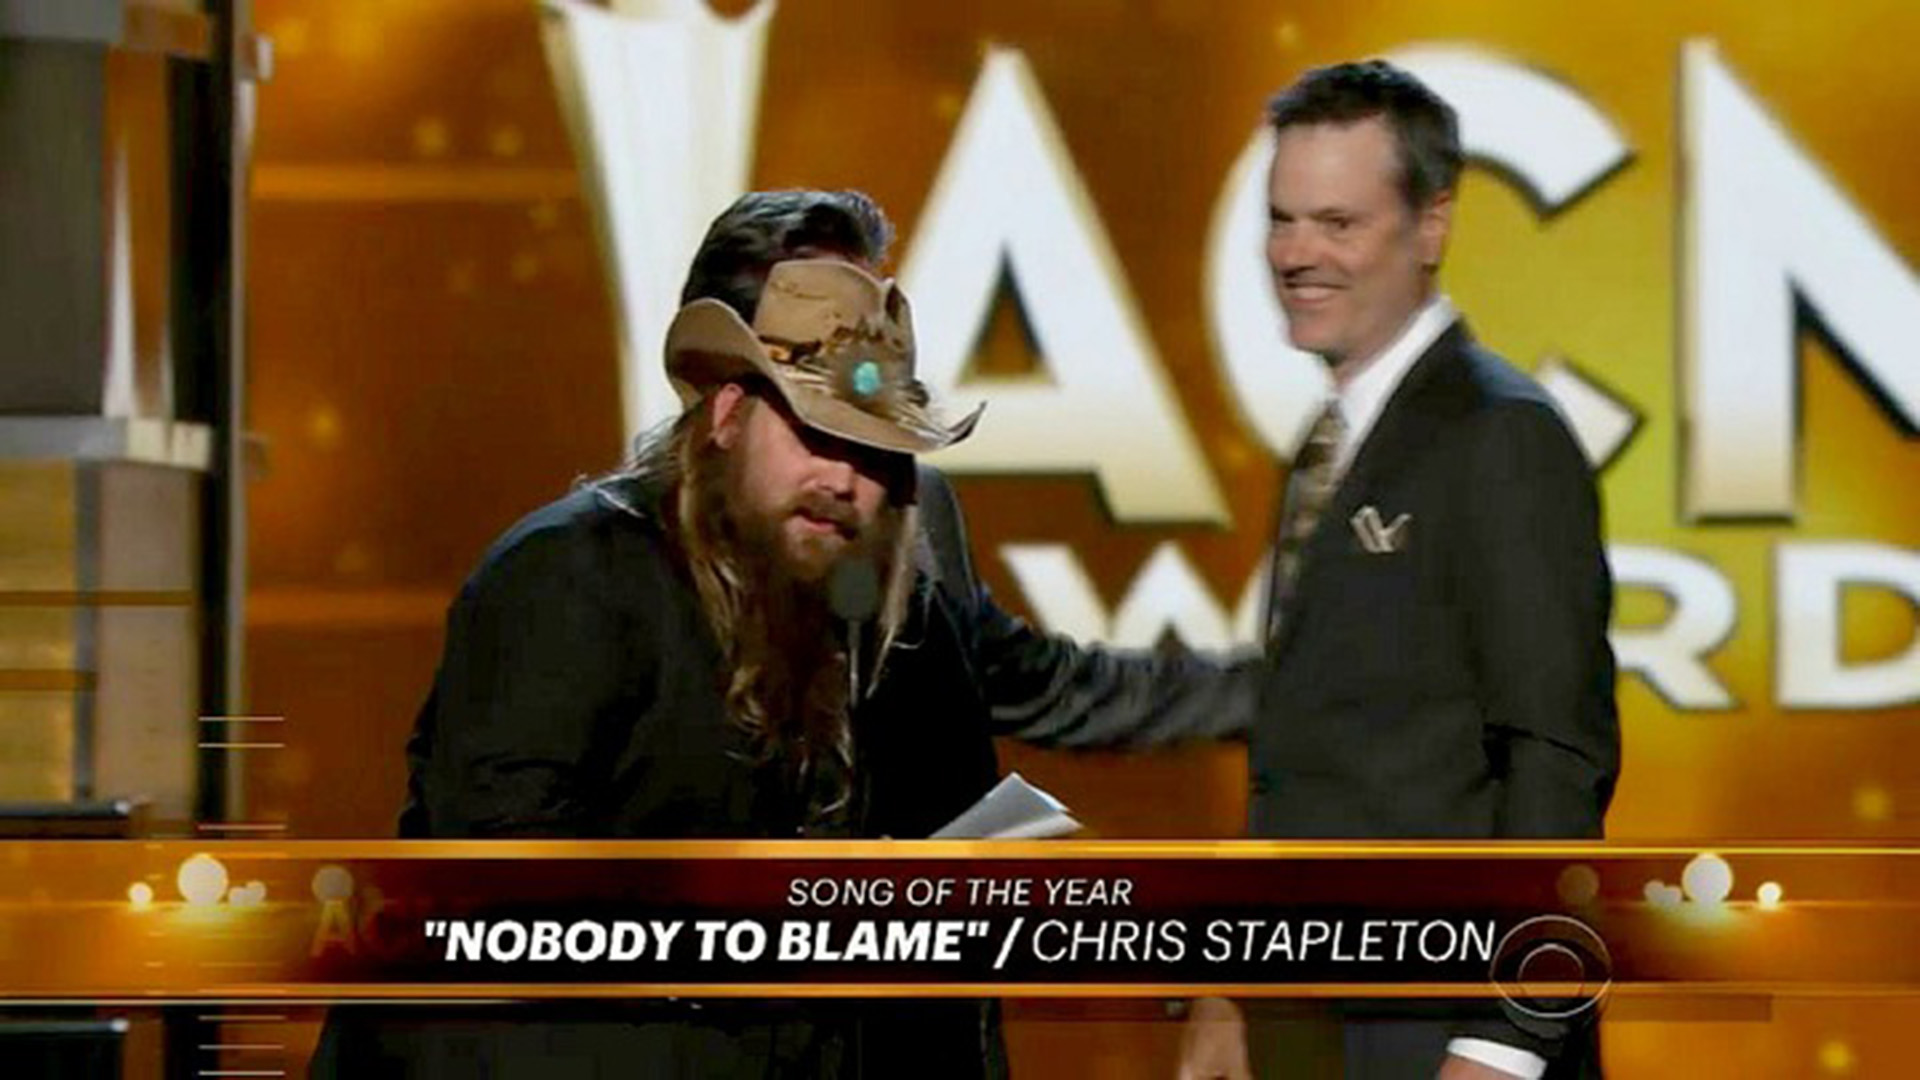 Chris Stapleton: Song Of The Year